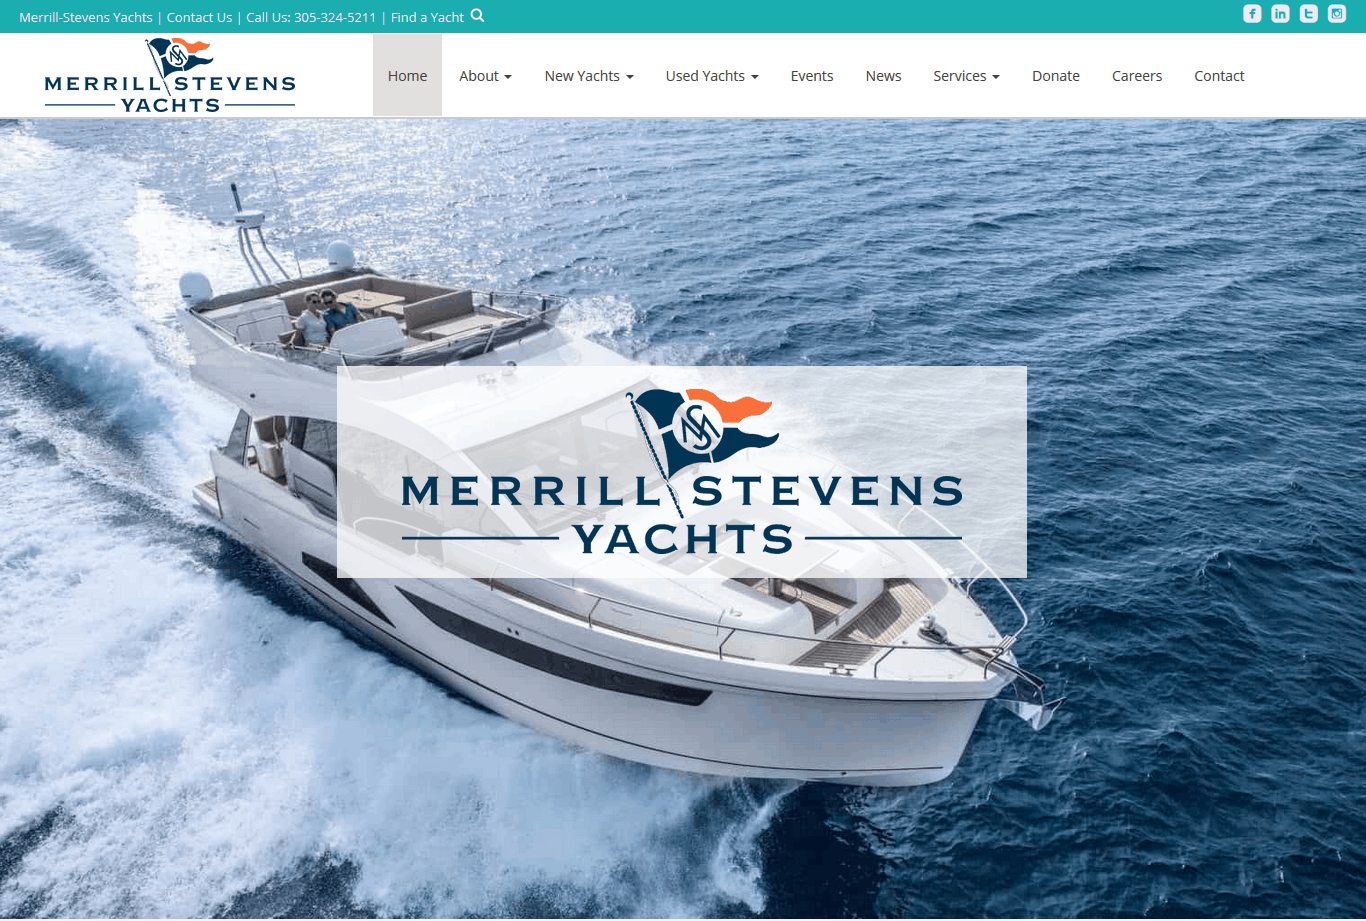 Merrill Stevens Yachts Miami Website by iSatisfy.com